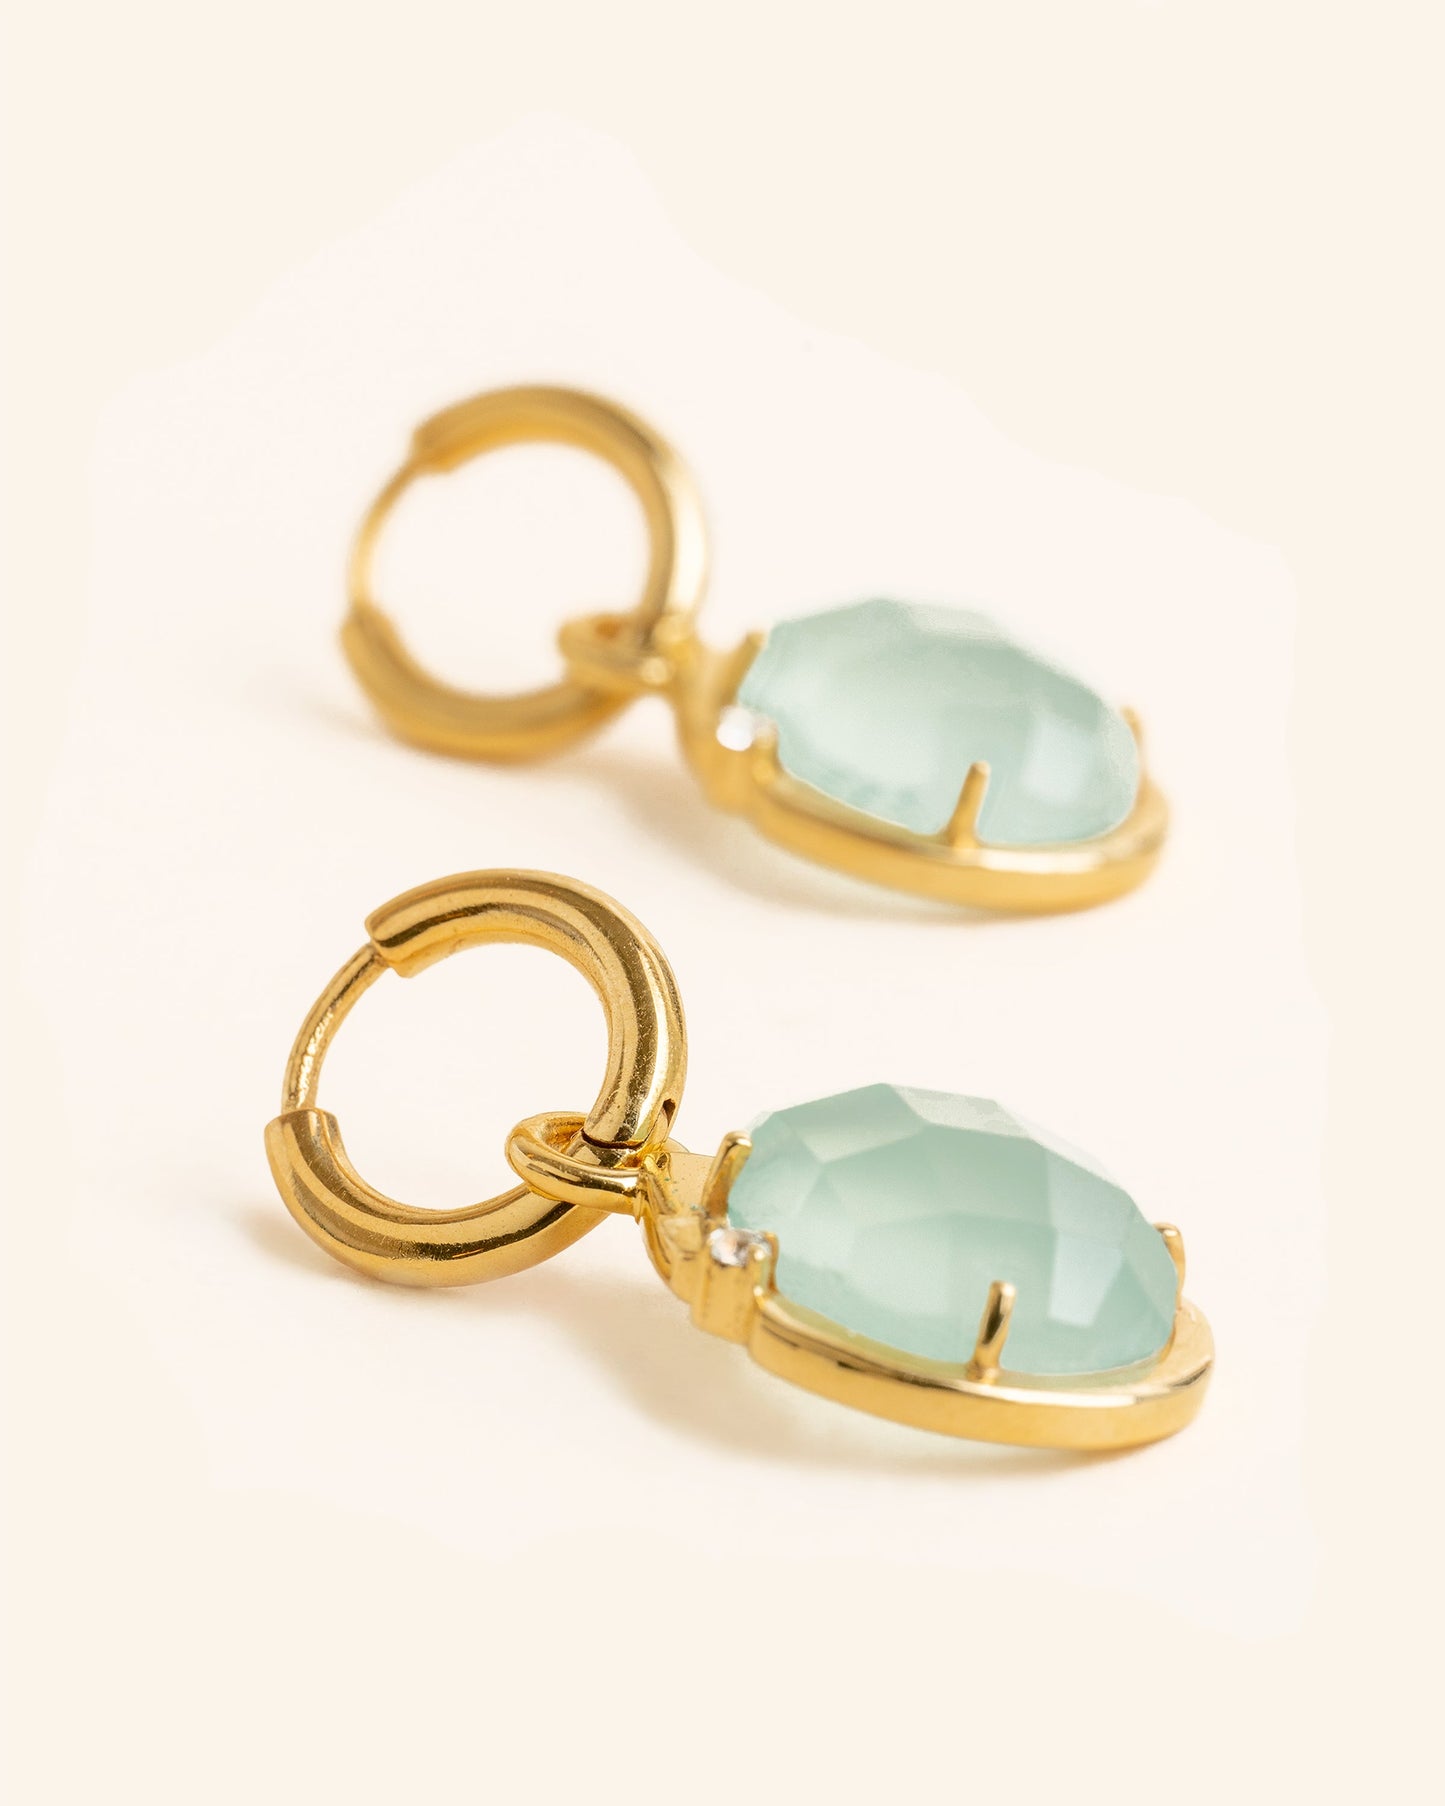 Rain earrings with blue chalcedony